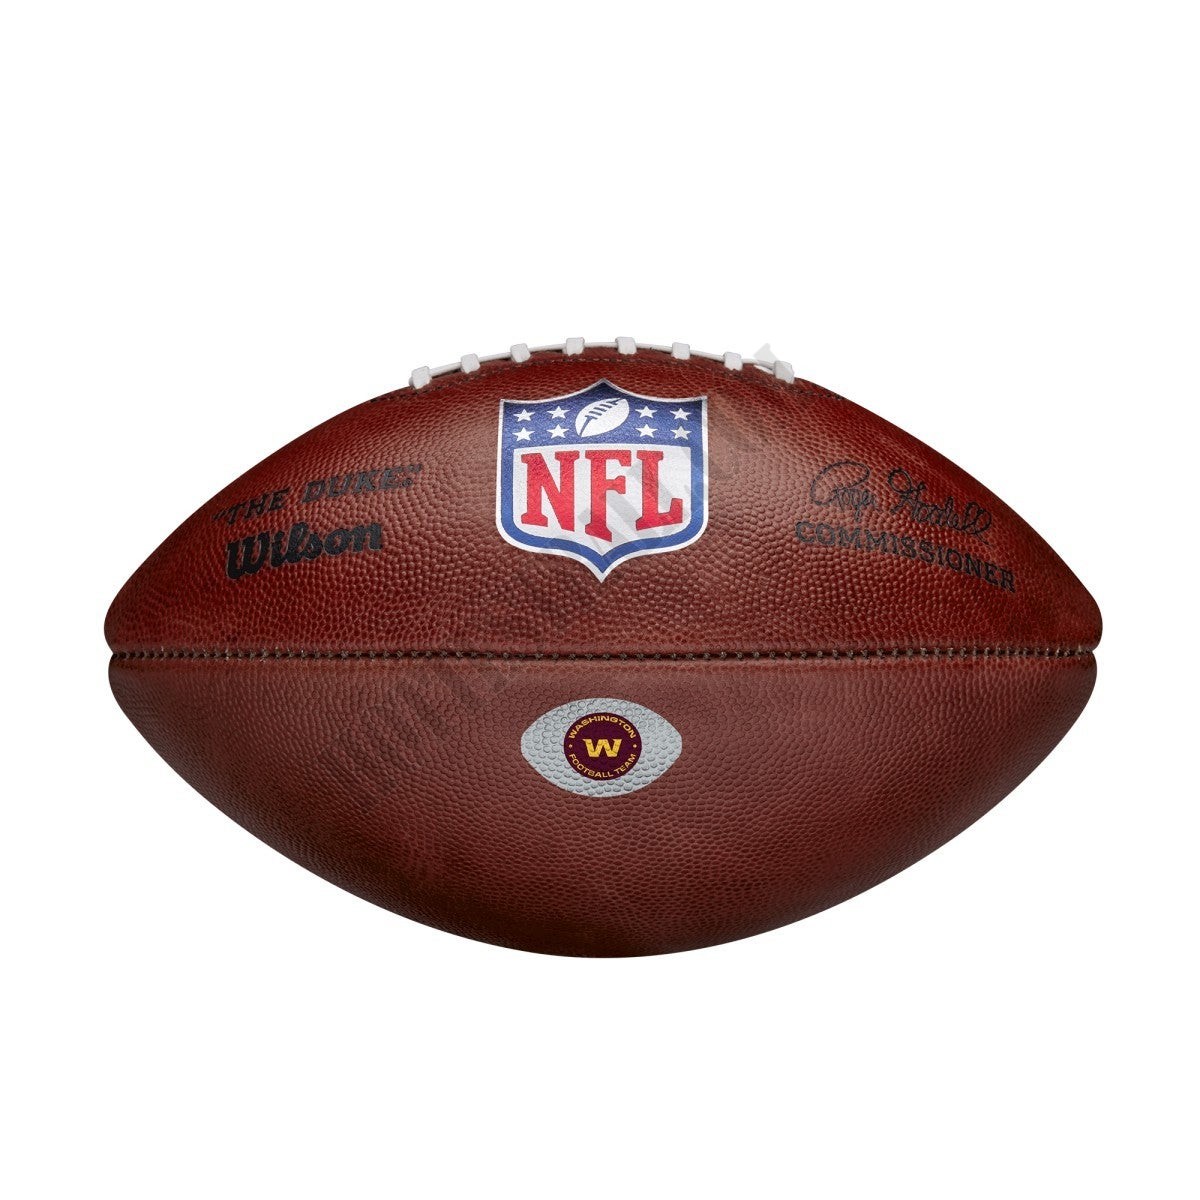 The Duke Decal NFL Football - Washington Football Team ● Wilson Promotions - The Duke Decal NFL Football - Washington Football Team ● Wilson Promotions